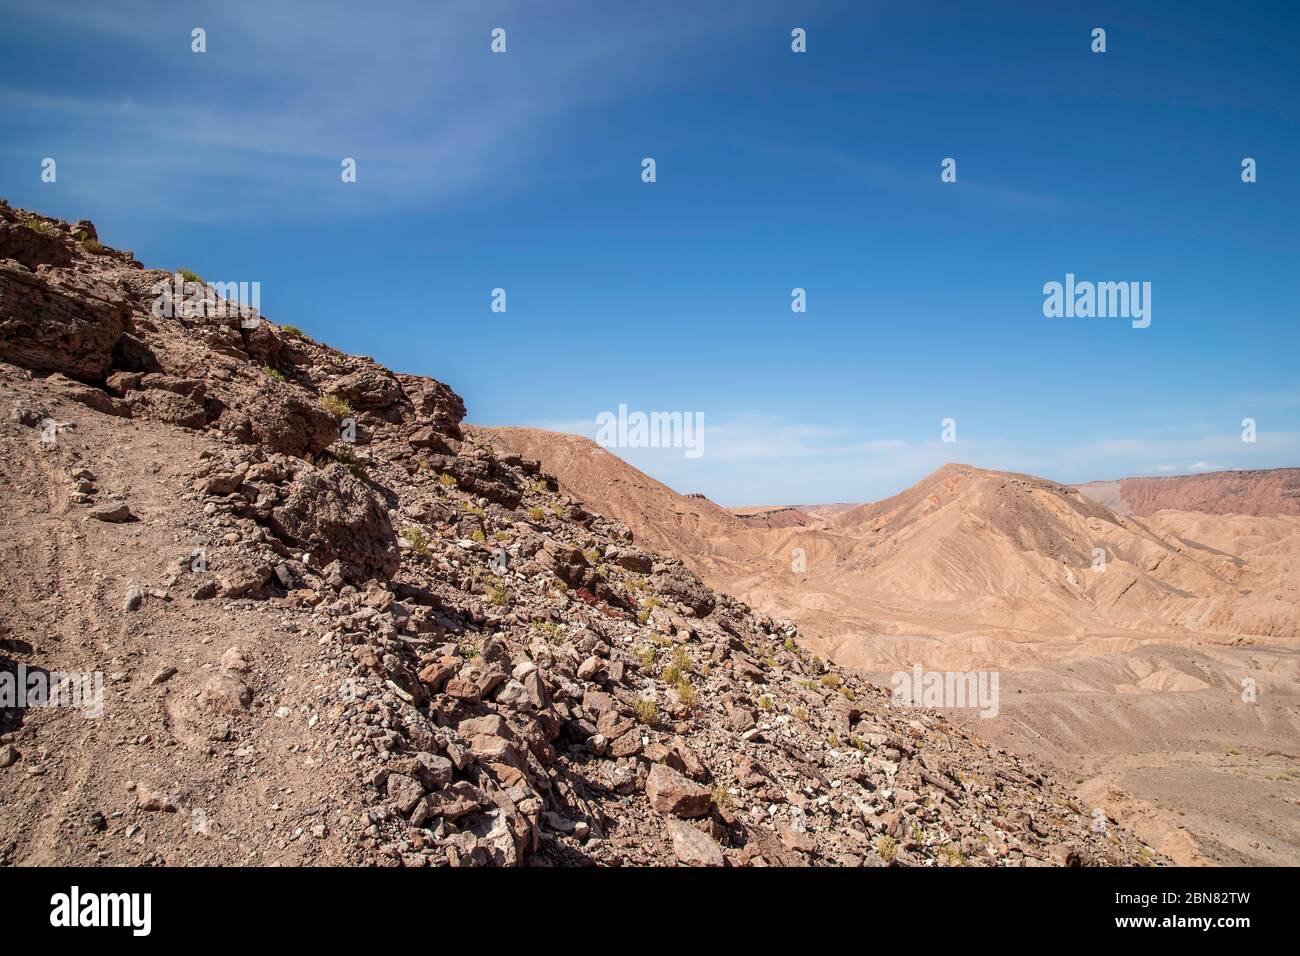 Ridgeline in the mountains, Atacama desert. Stock Photo